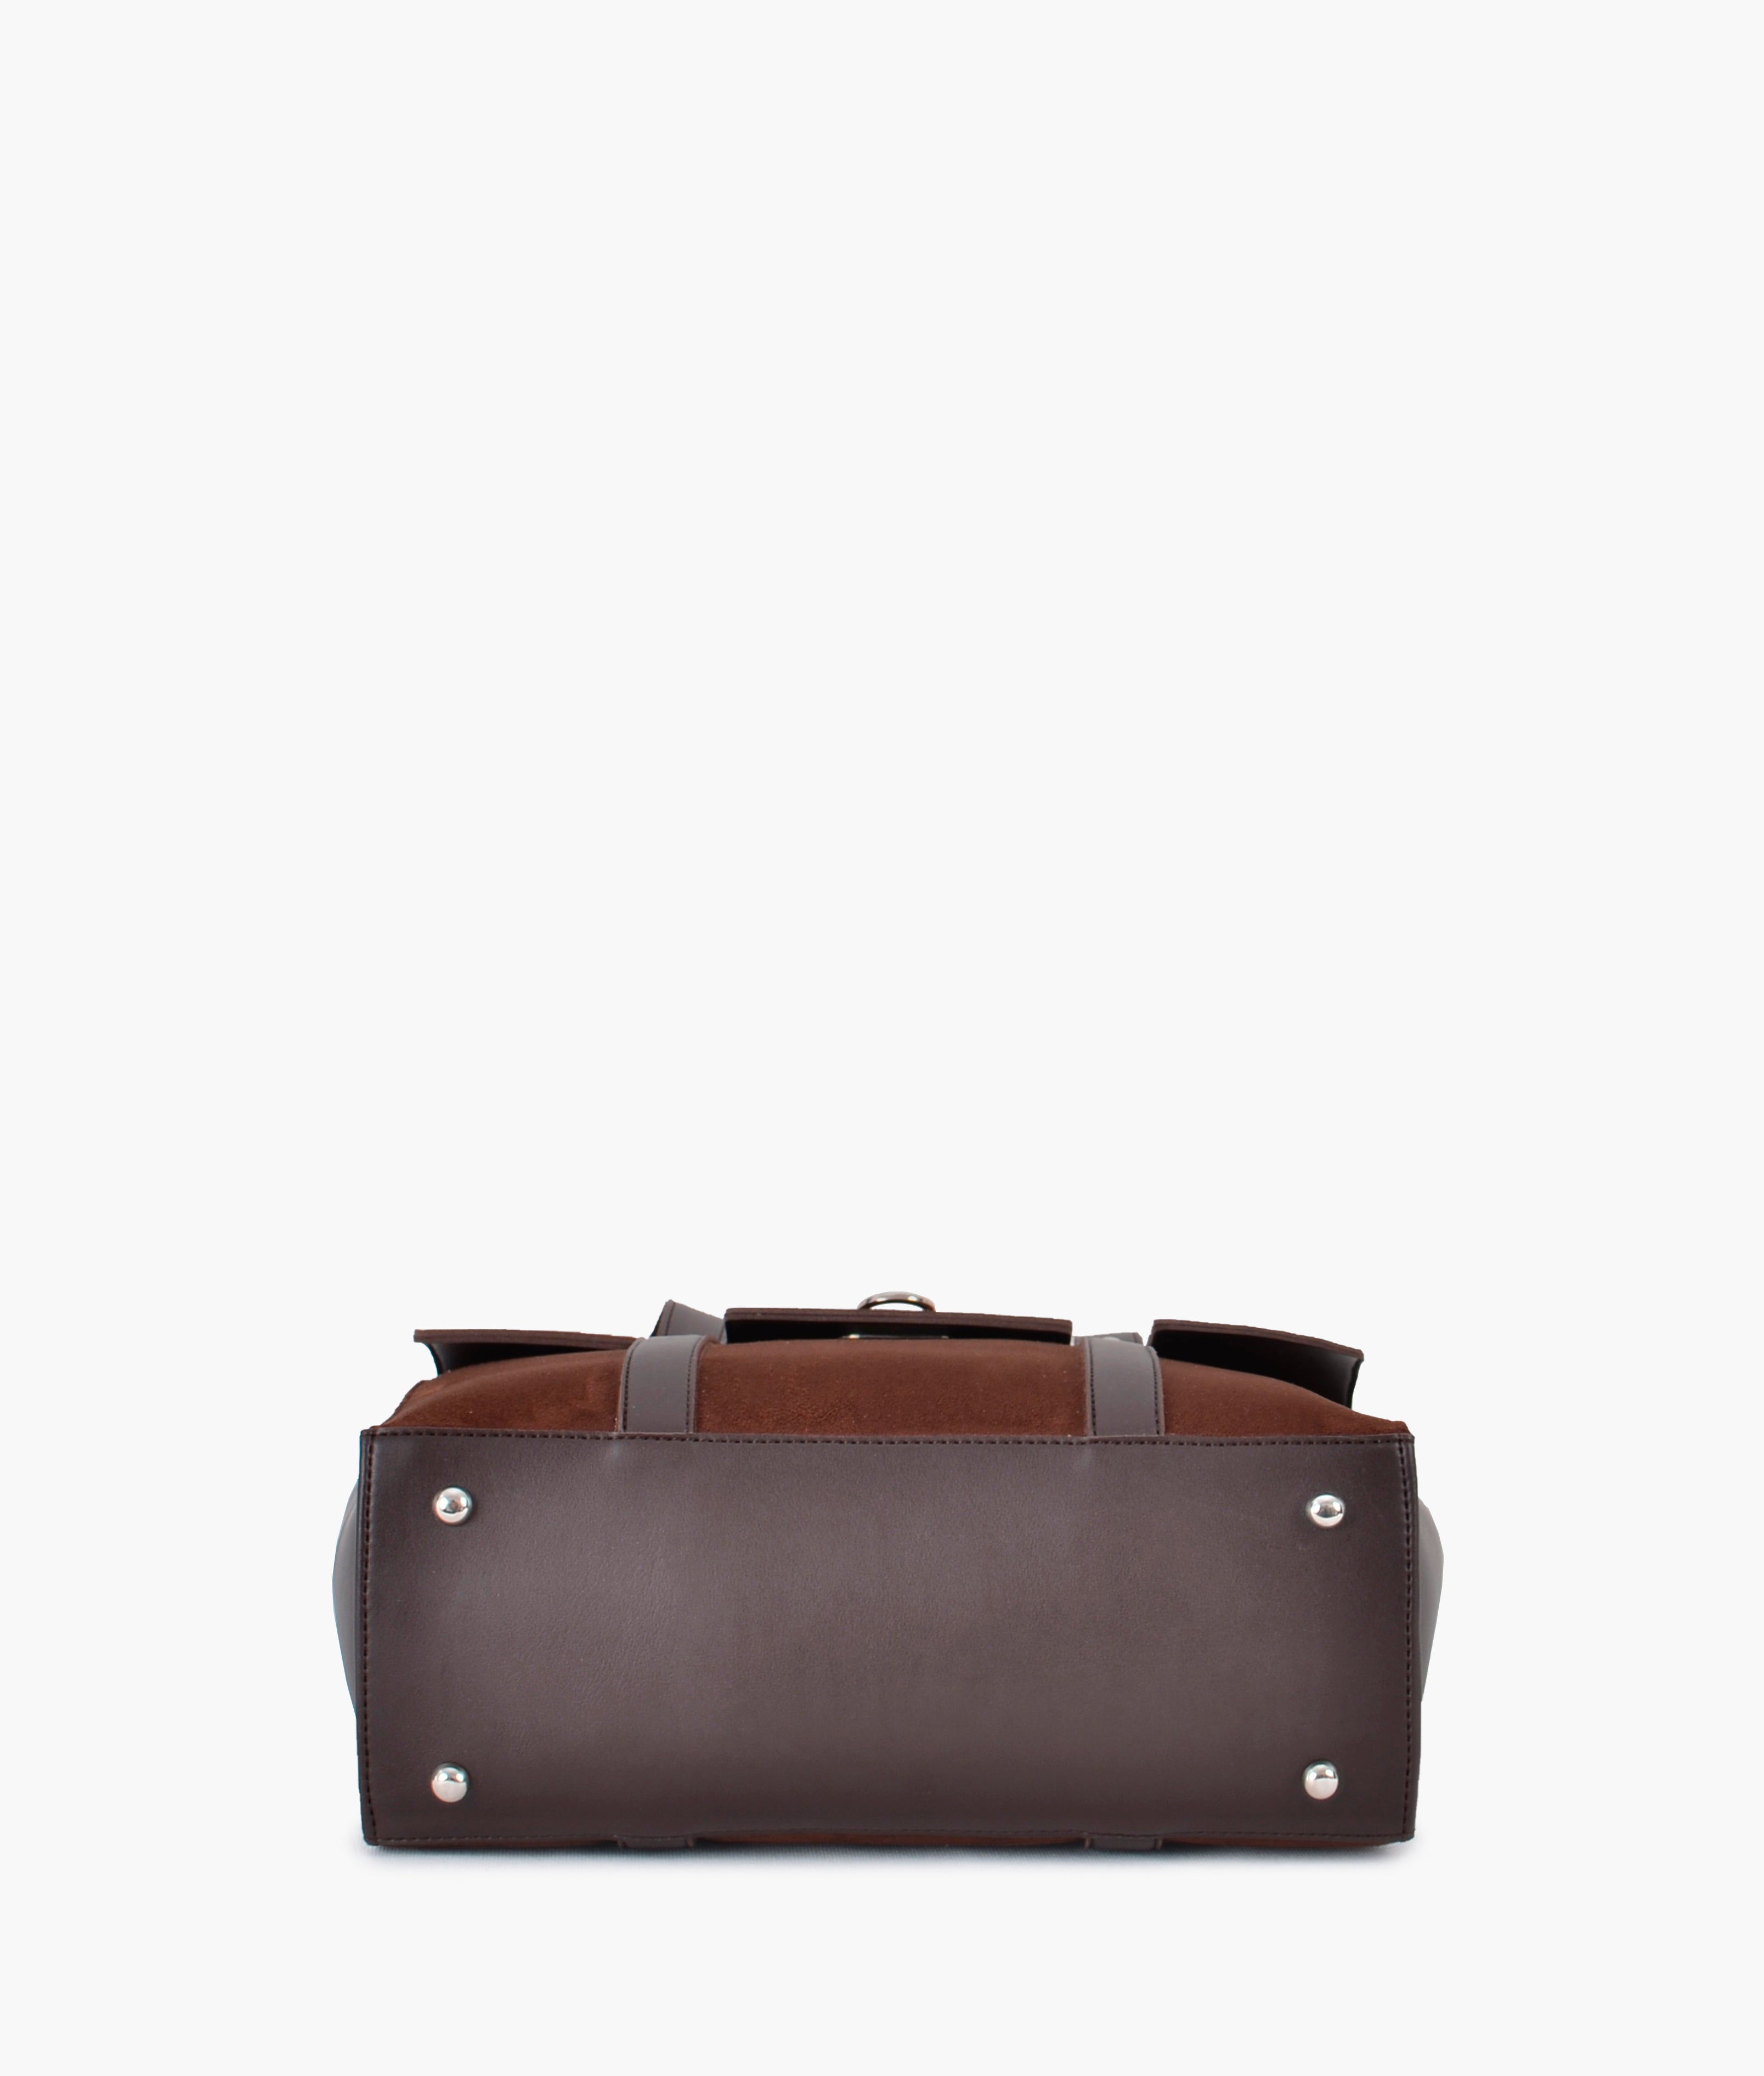 Dark brown suede carry-all satchel bag